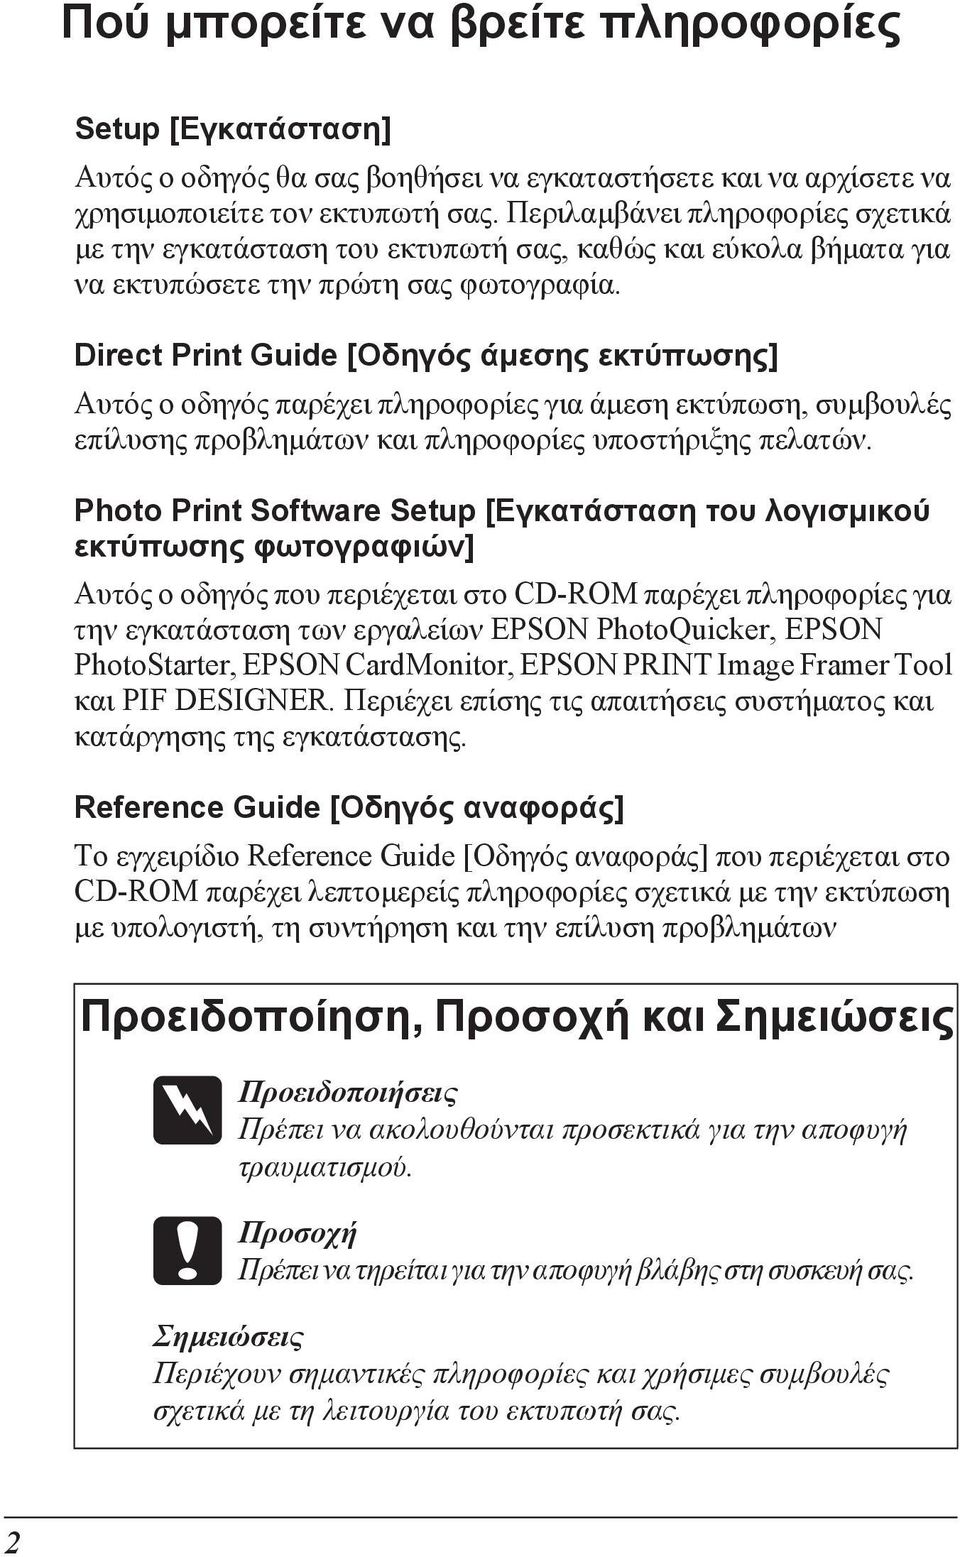 Direct Print Guide [Οδηγός άµεσης εκτύπωσης] Αυτός ο οδηγός παρέχει πληροφορίες για άµεση εκτύπωση, συµβουλές επίλυσης προβληµάτων και πληροφορίες υποστήριξης πελατών.